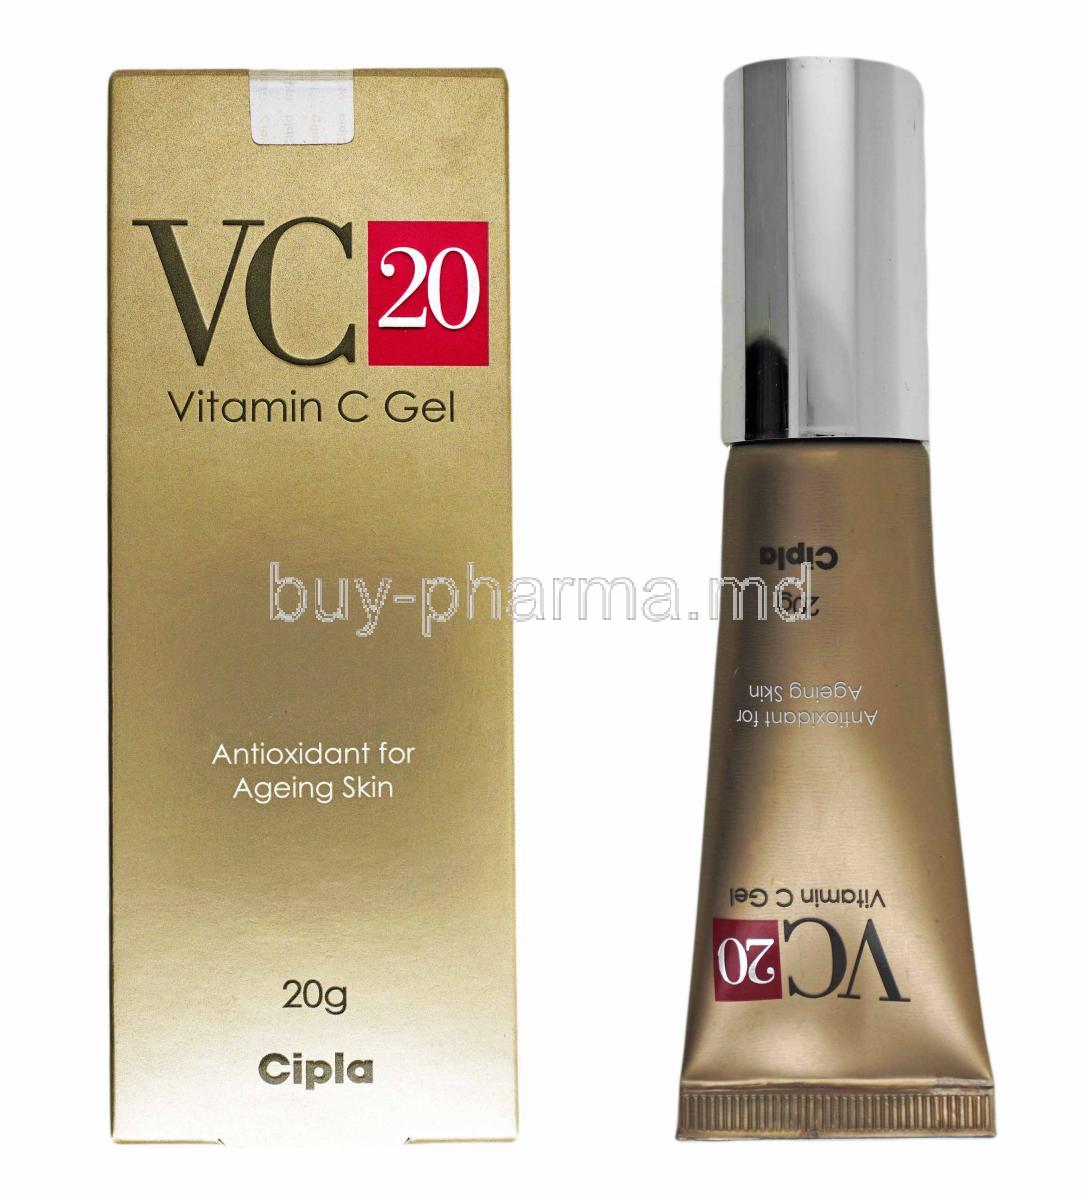 VC 20 Vitamin C Gel, L-Ascorbic Acid box and bottle